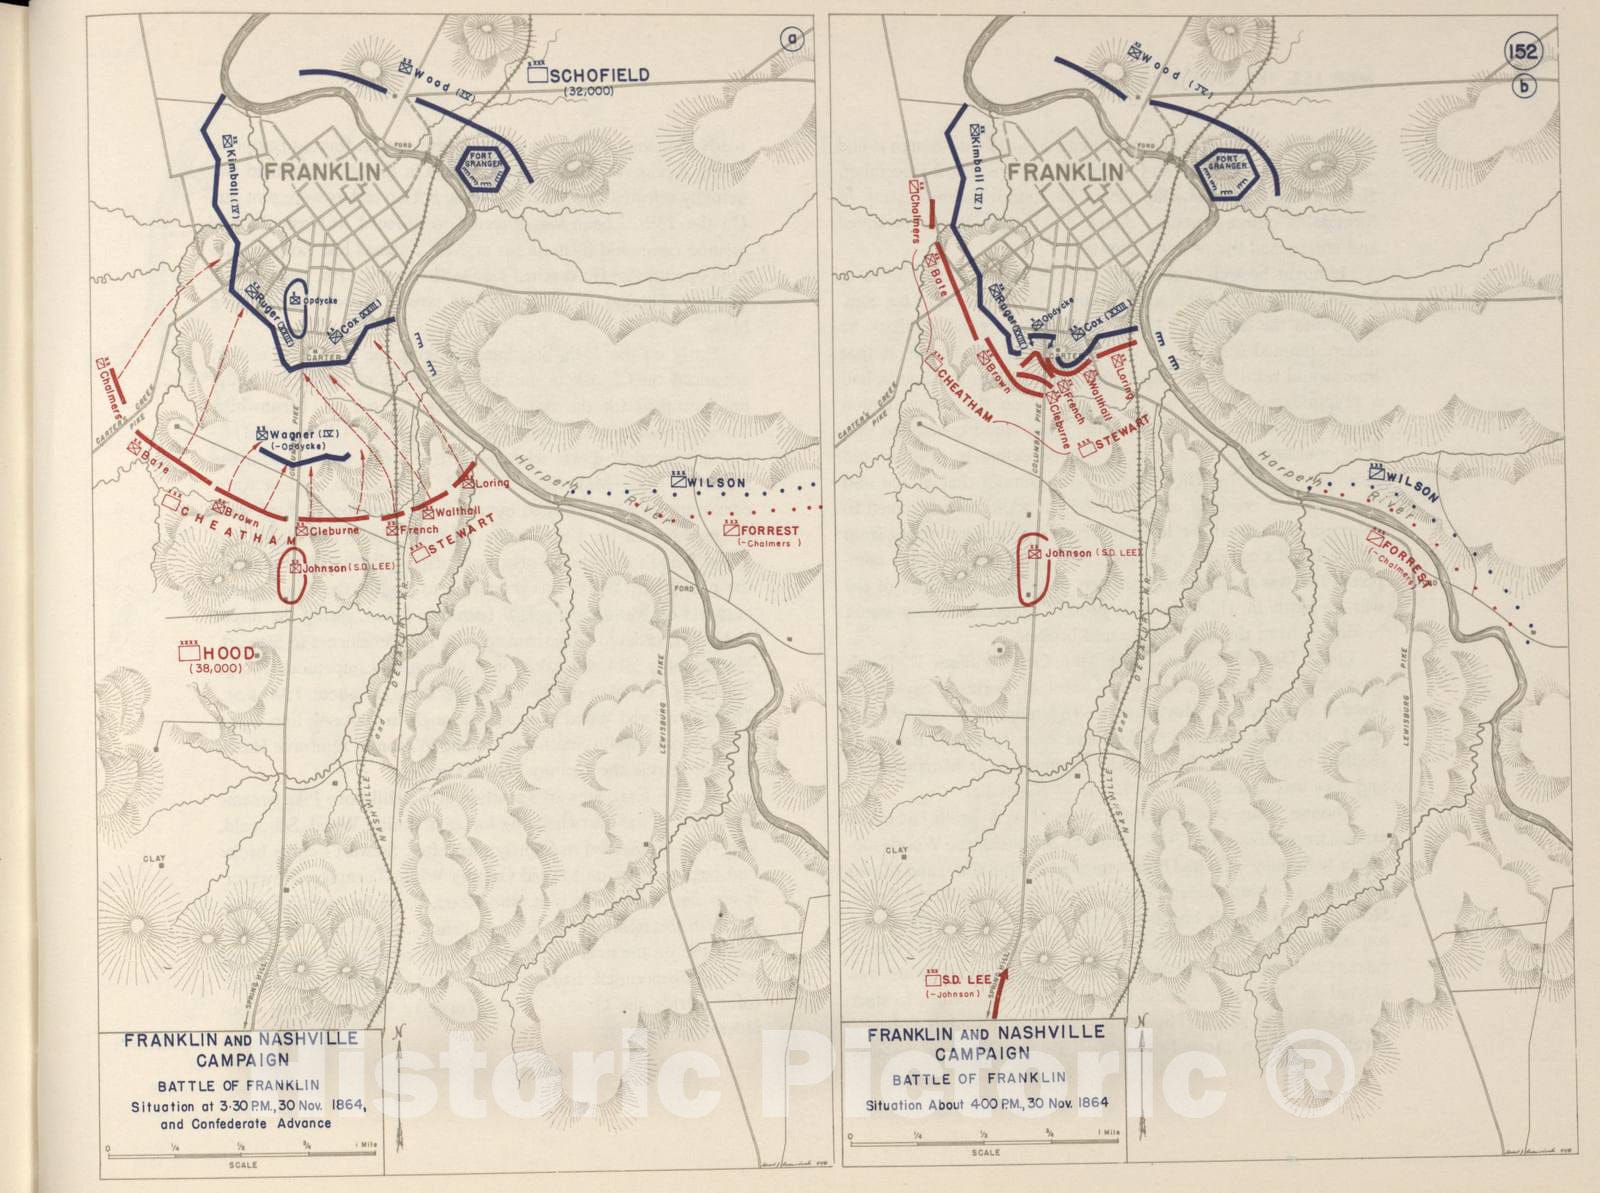 Historic 1962 Map - The West Point Atlas of The Civil War - Franklin and Nashville Campaign, Battle of Nashville, Dec. 1864